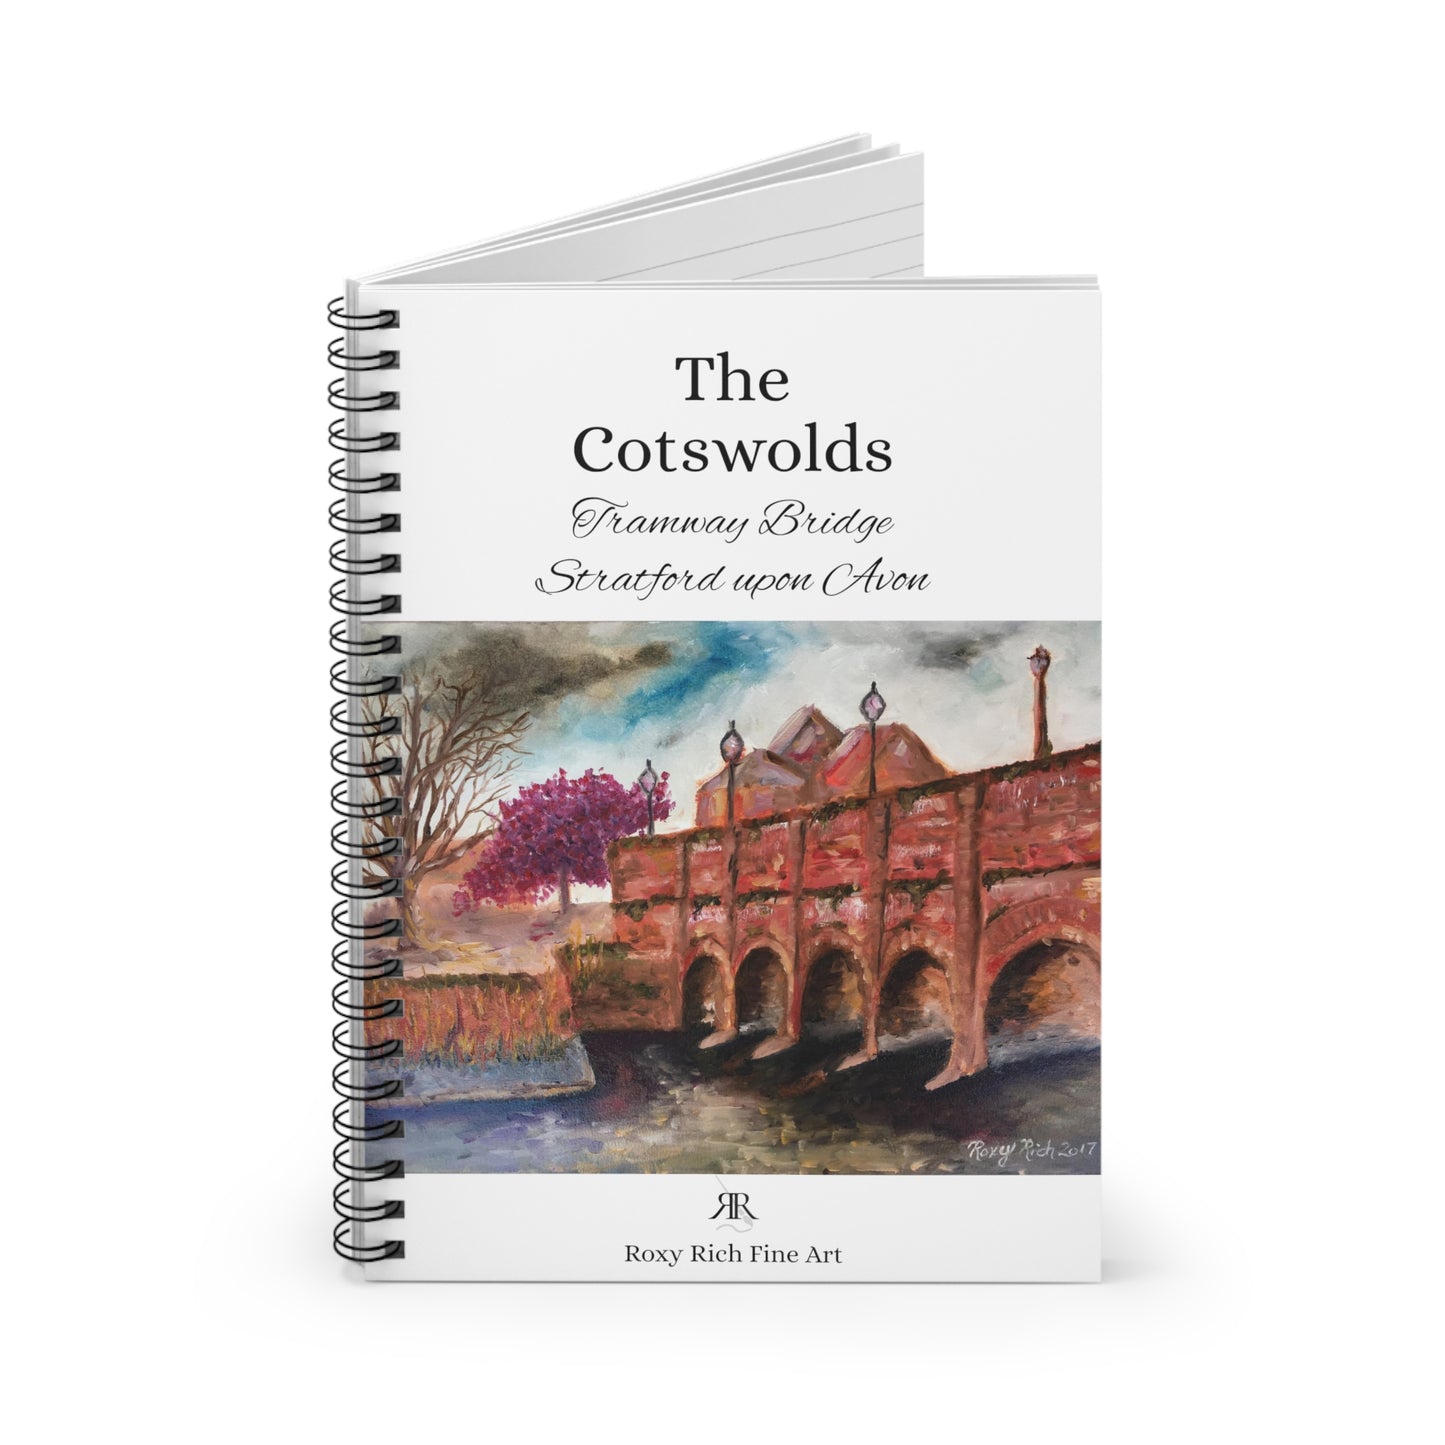 Tramway Bridge Stratford upon Avon "The Cotswolds" Spiral Notebook